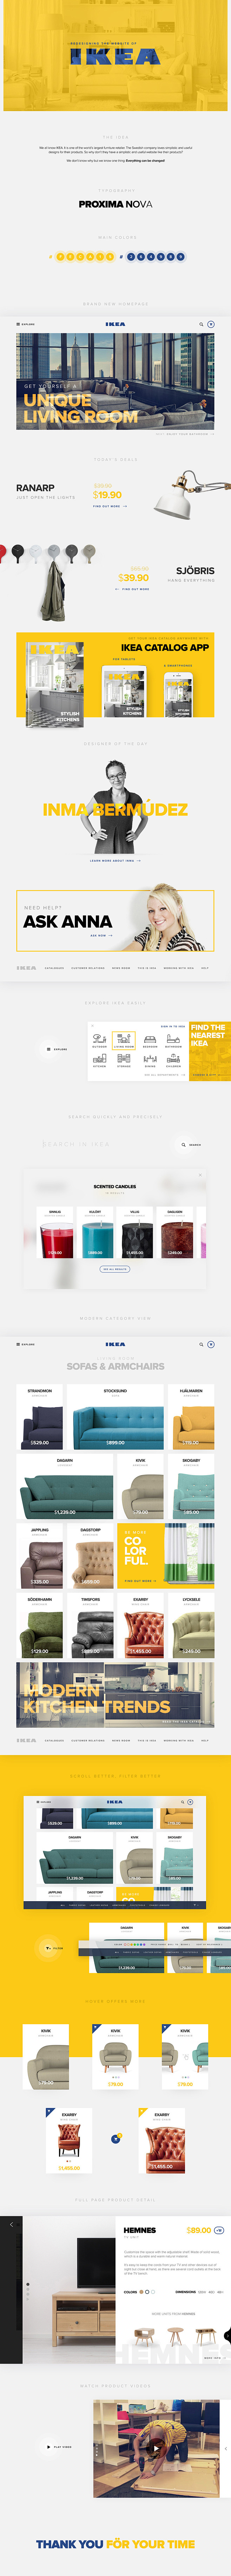 IKEA Redesign - UI &...